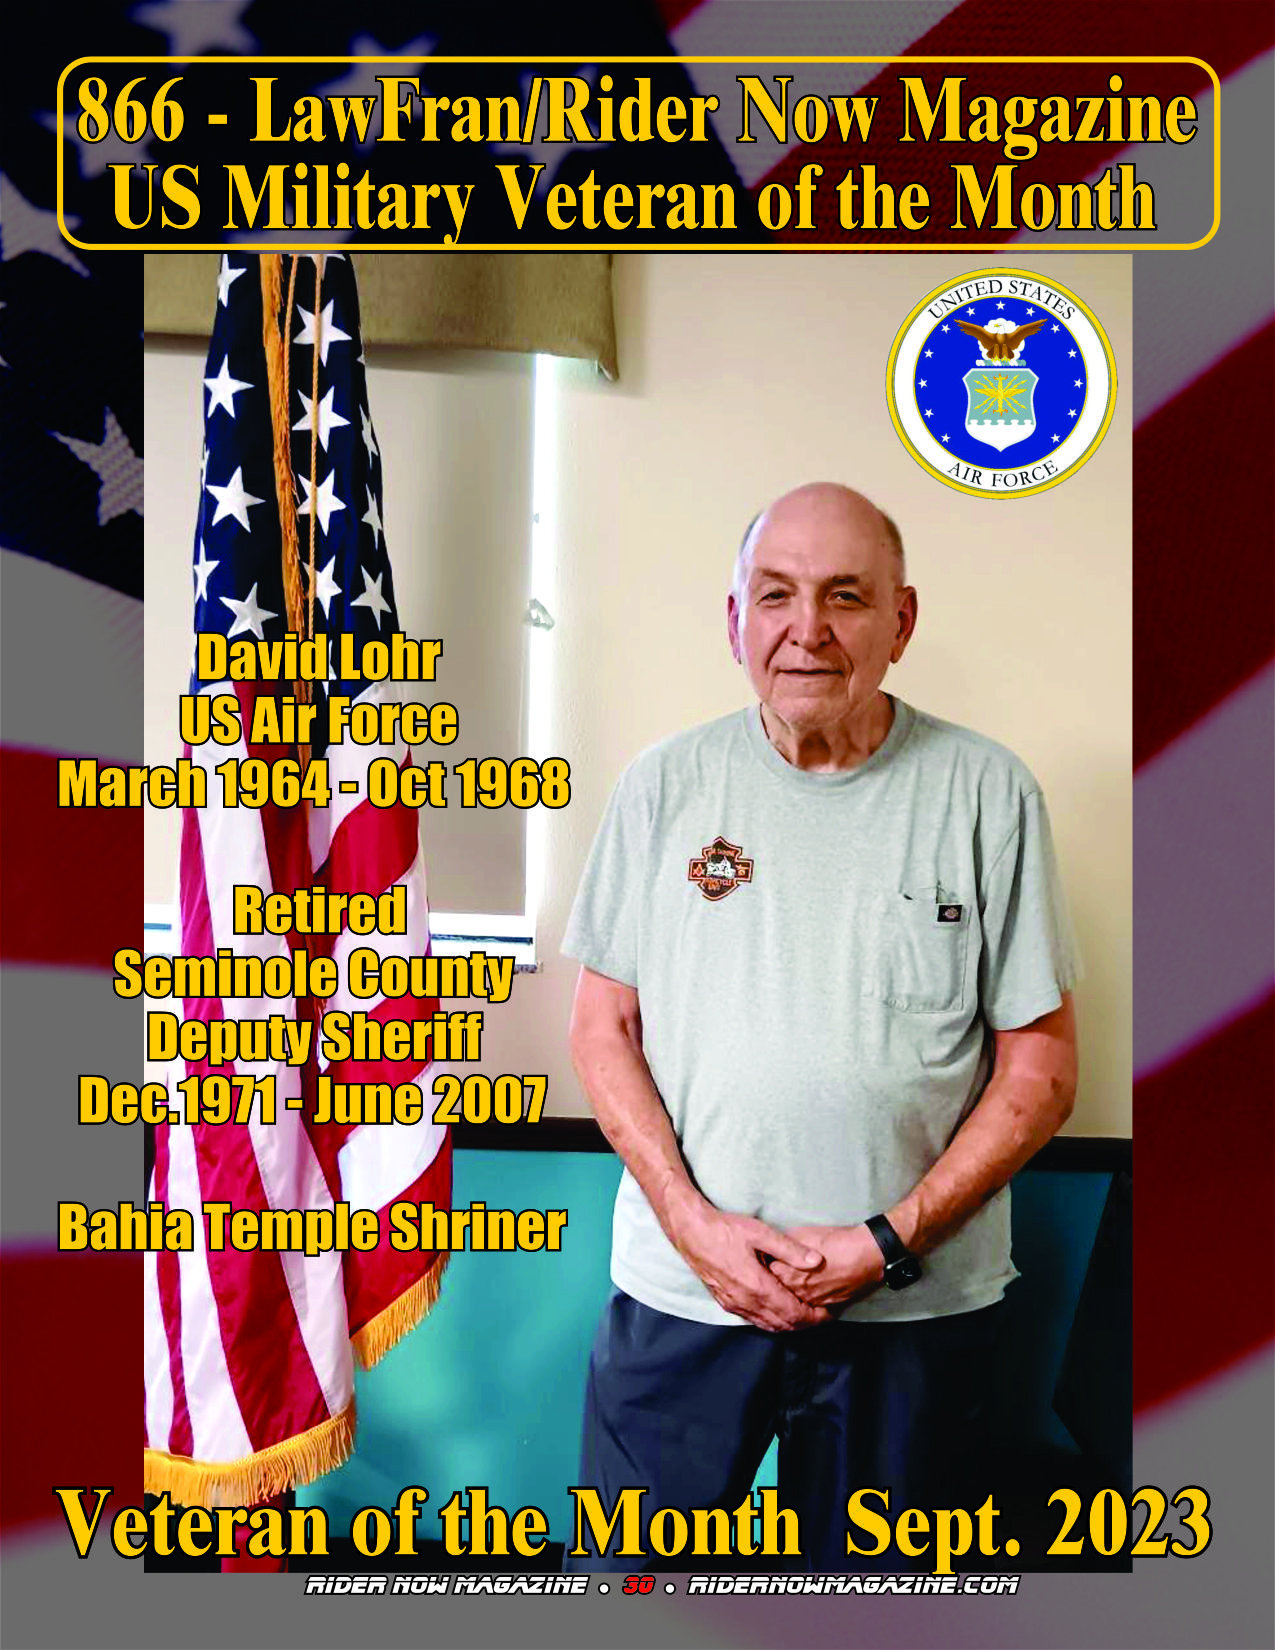 Veteran of the Month